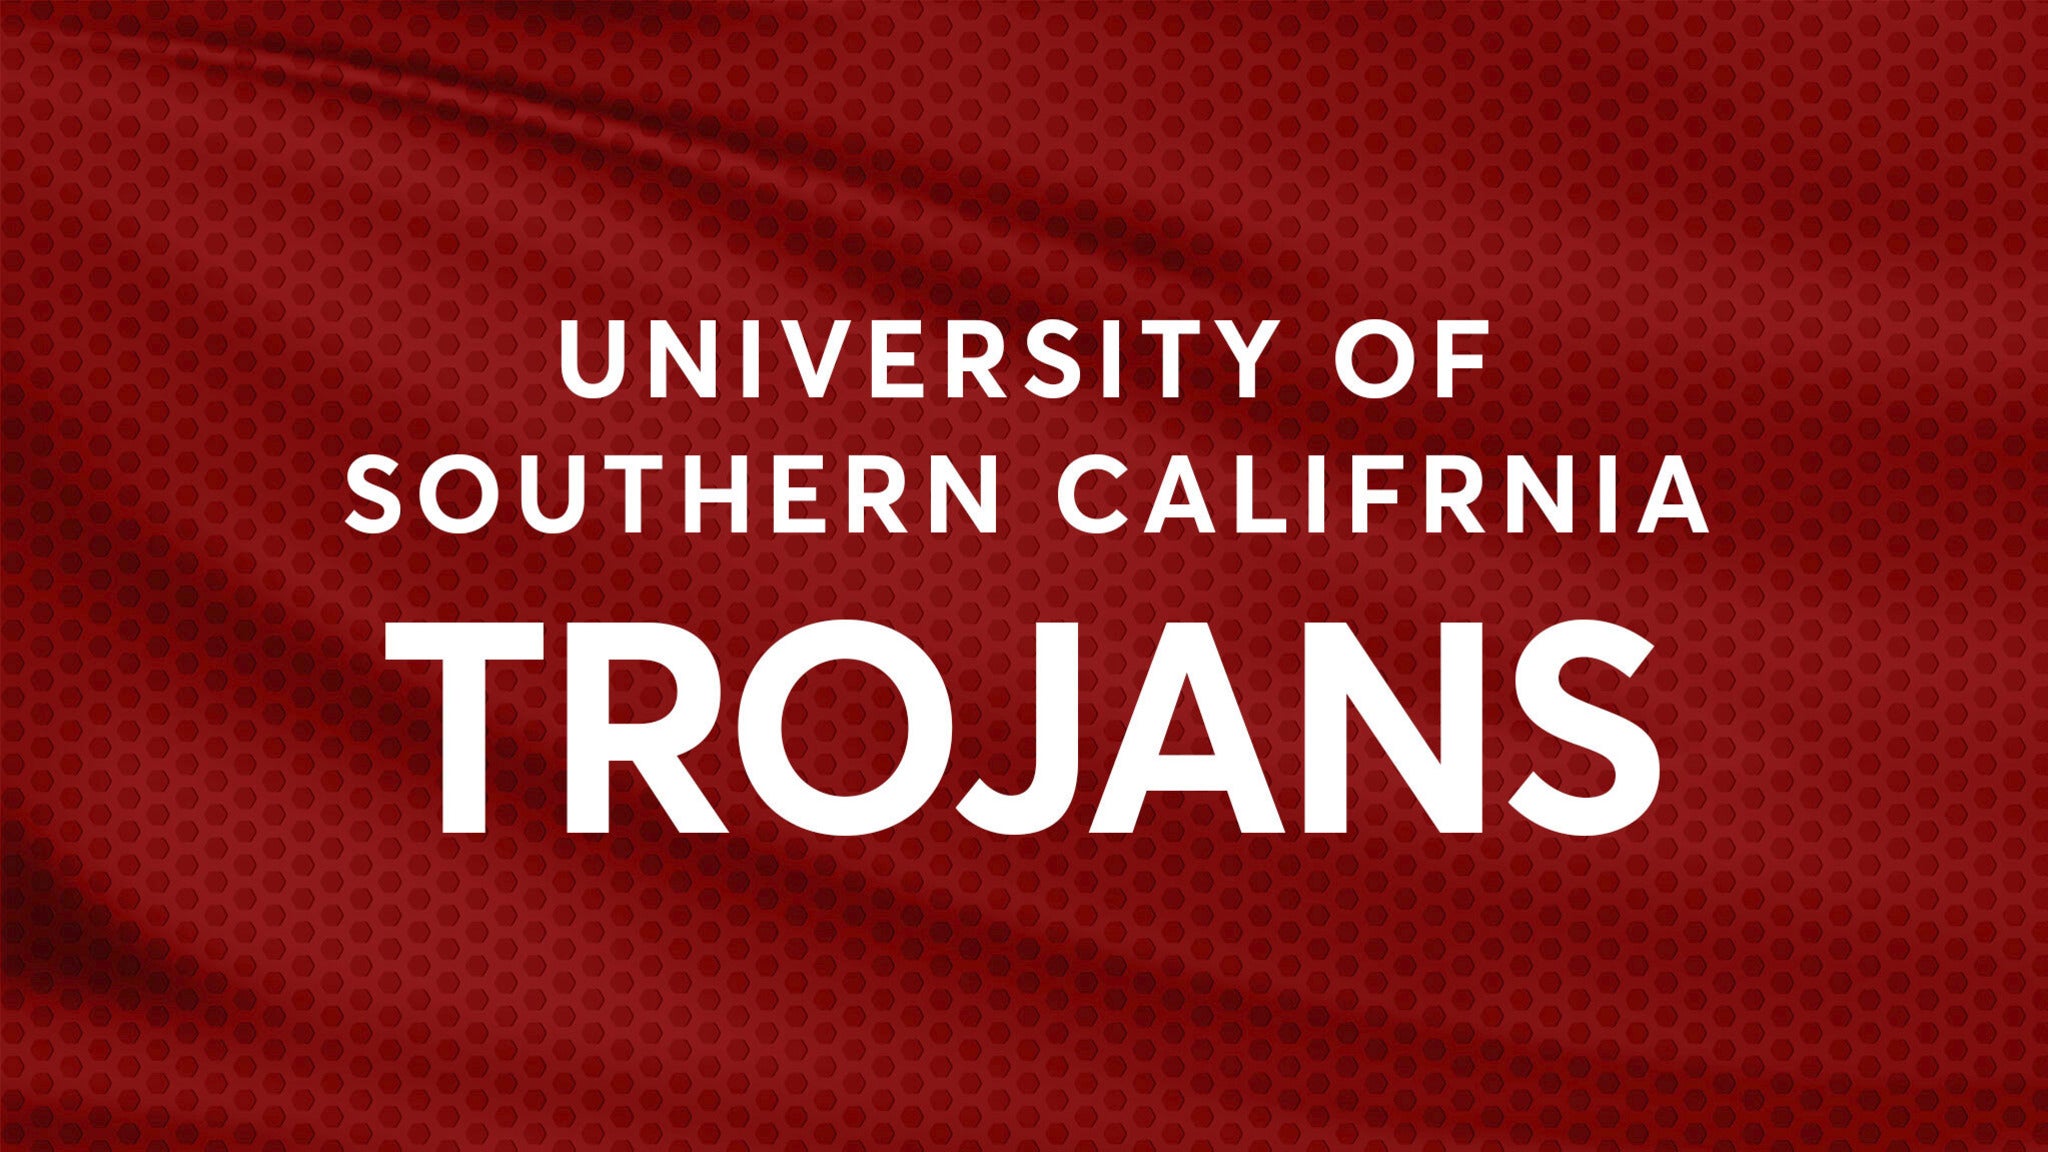 USC Trojans Football vs. Nevada Wolfpack Football